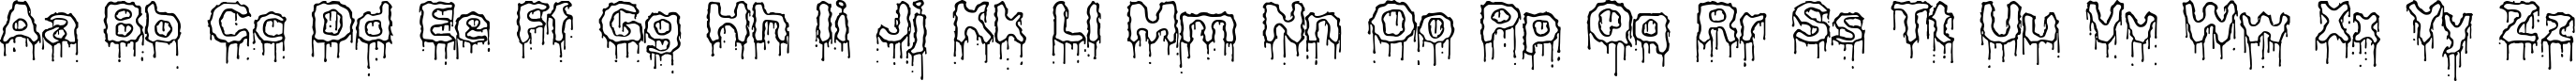 Пример написания английского алфавита шрифтом Plasma Drip Empty BRK